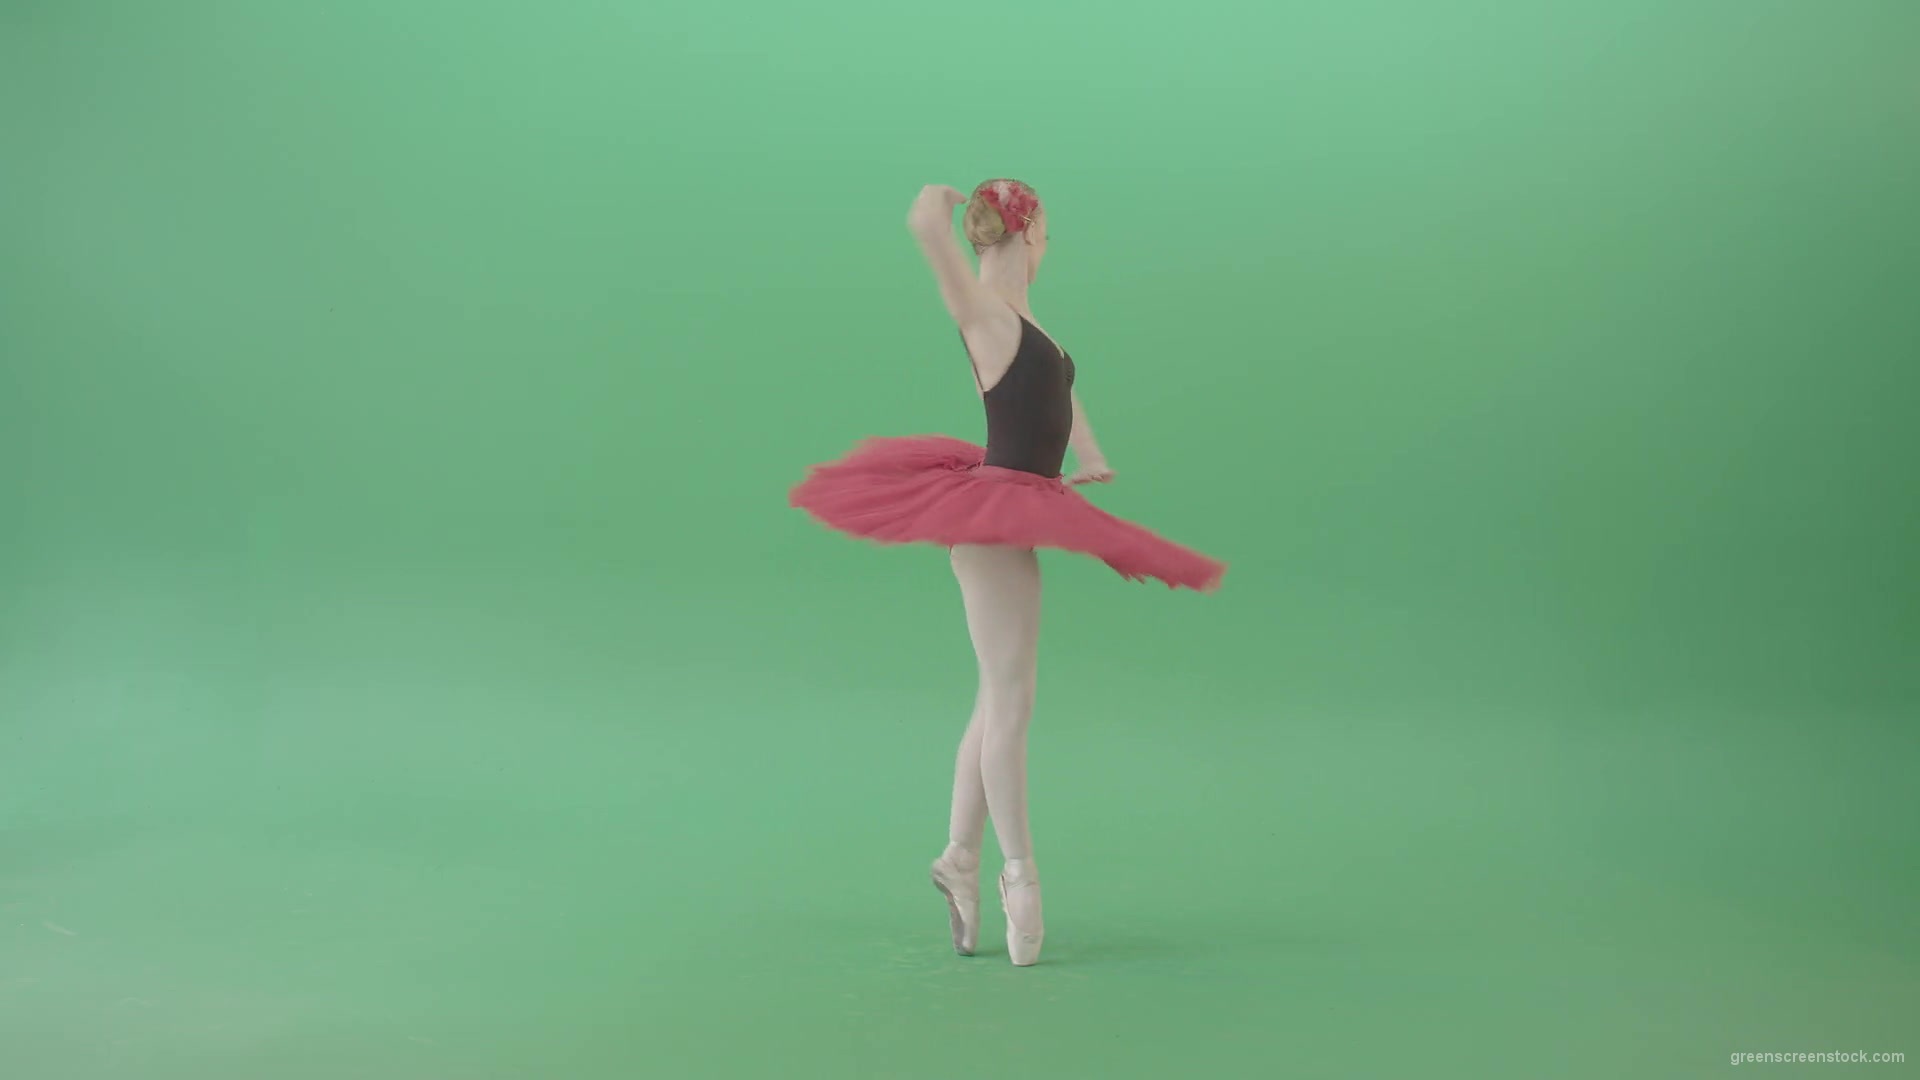 Happy-smiling-ballet-girl-ballerina-spinning-in-dance-on-green-screen-4K-Video-Footage-1920_006 Green Screen Stock